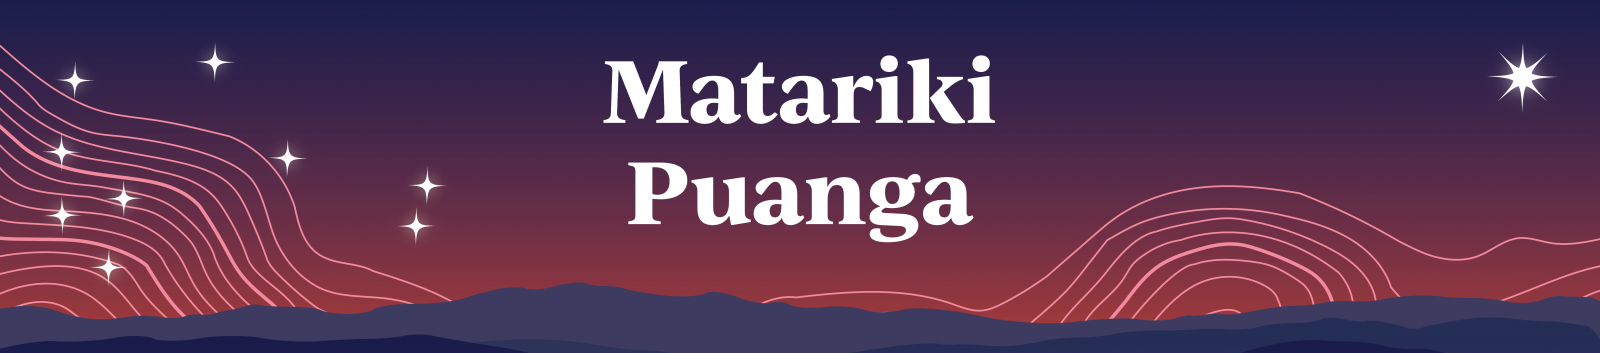 Matariki Puanga - the stars of matariki rise above a range of mountains